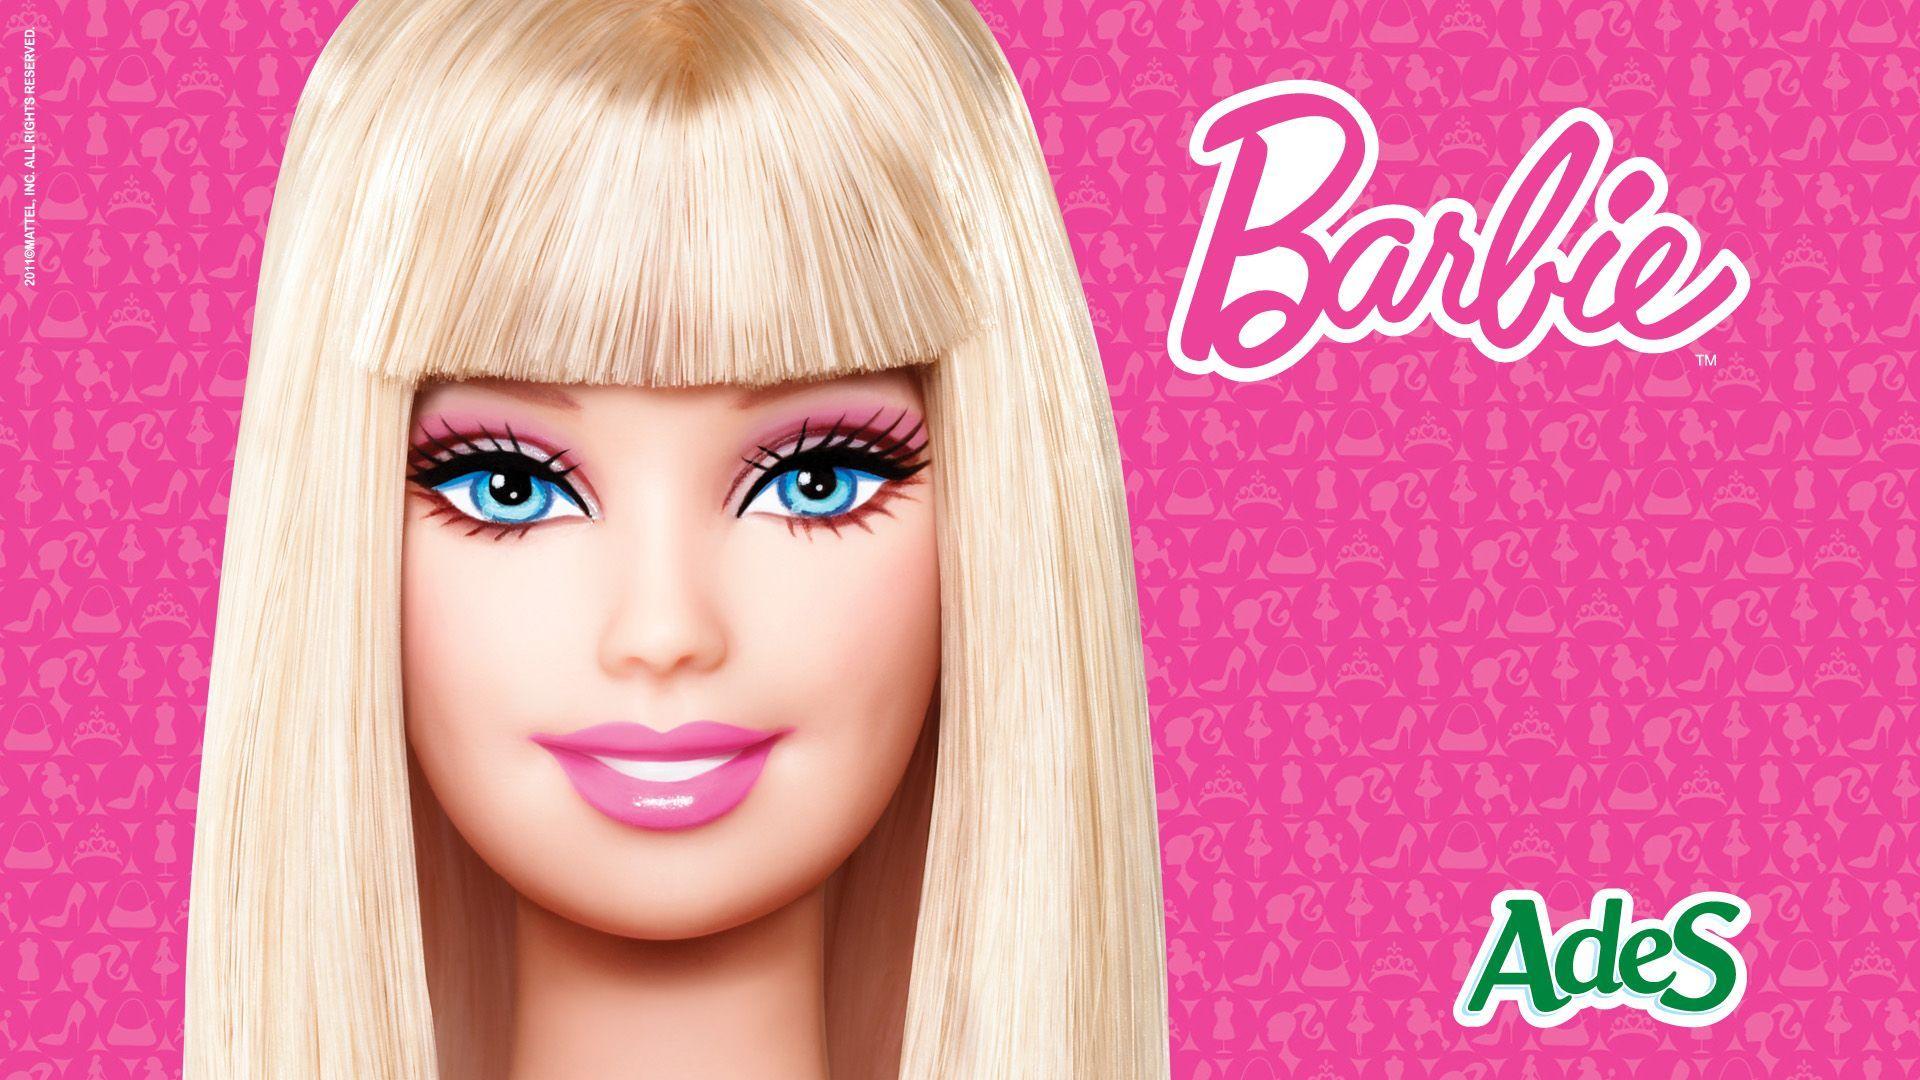 barbie wallpaper